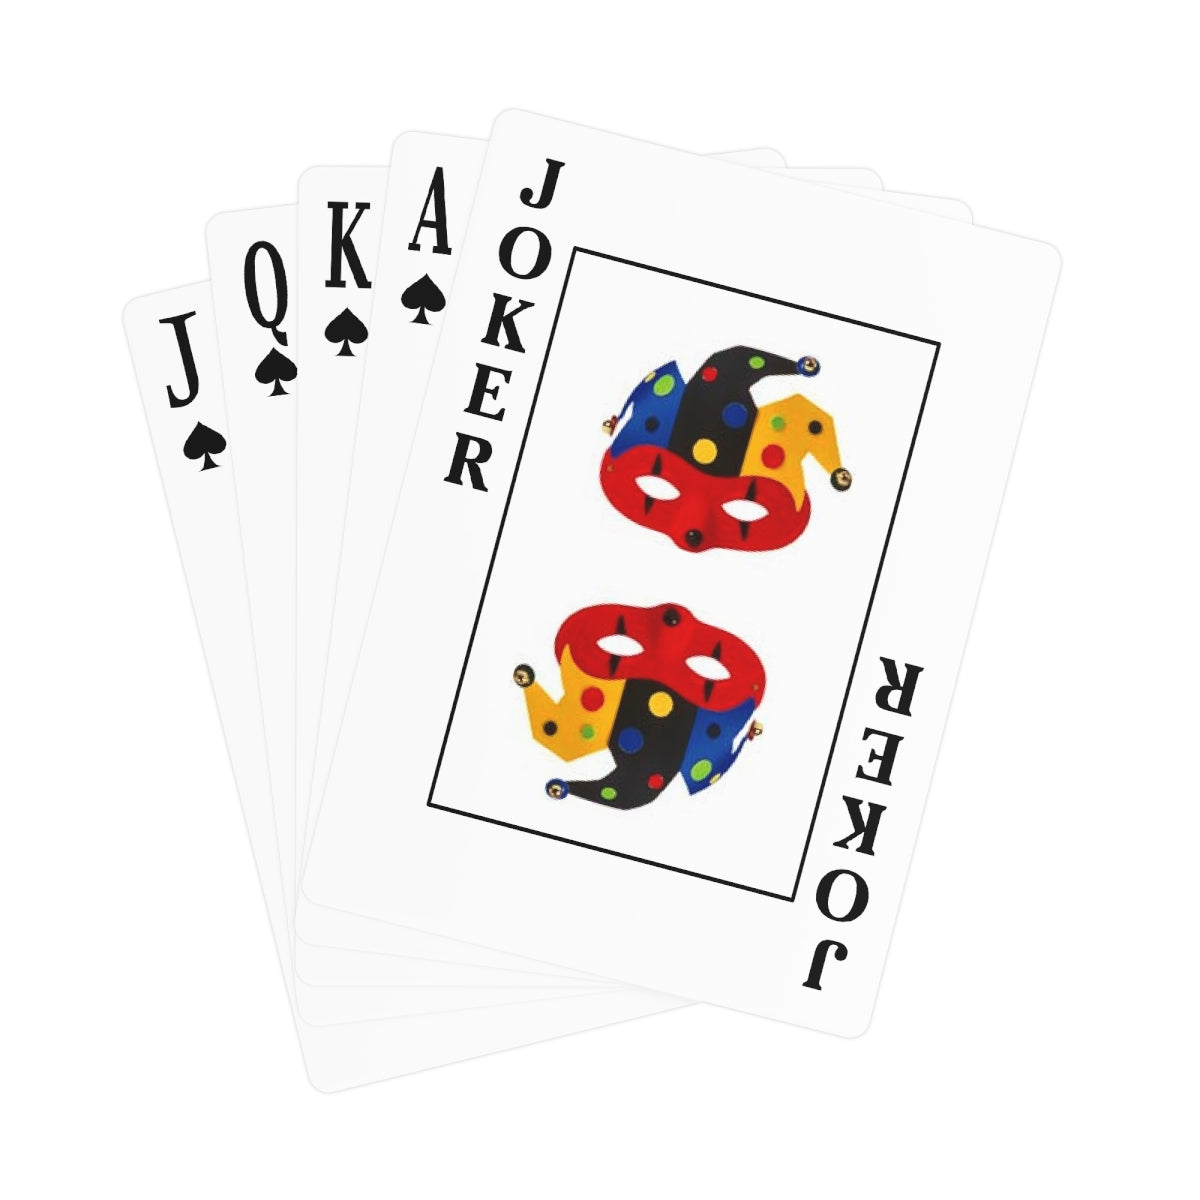 Poker Cards: Great Orion & Running Man Nebula